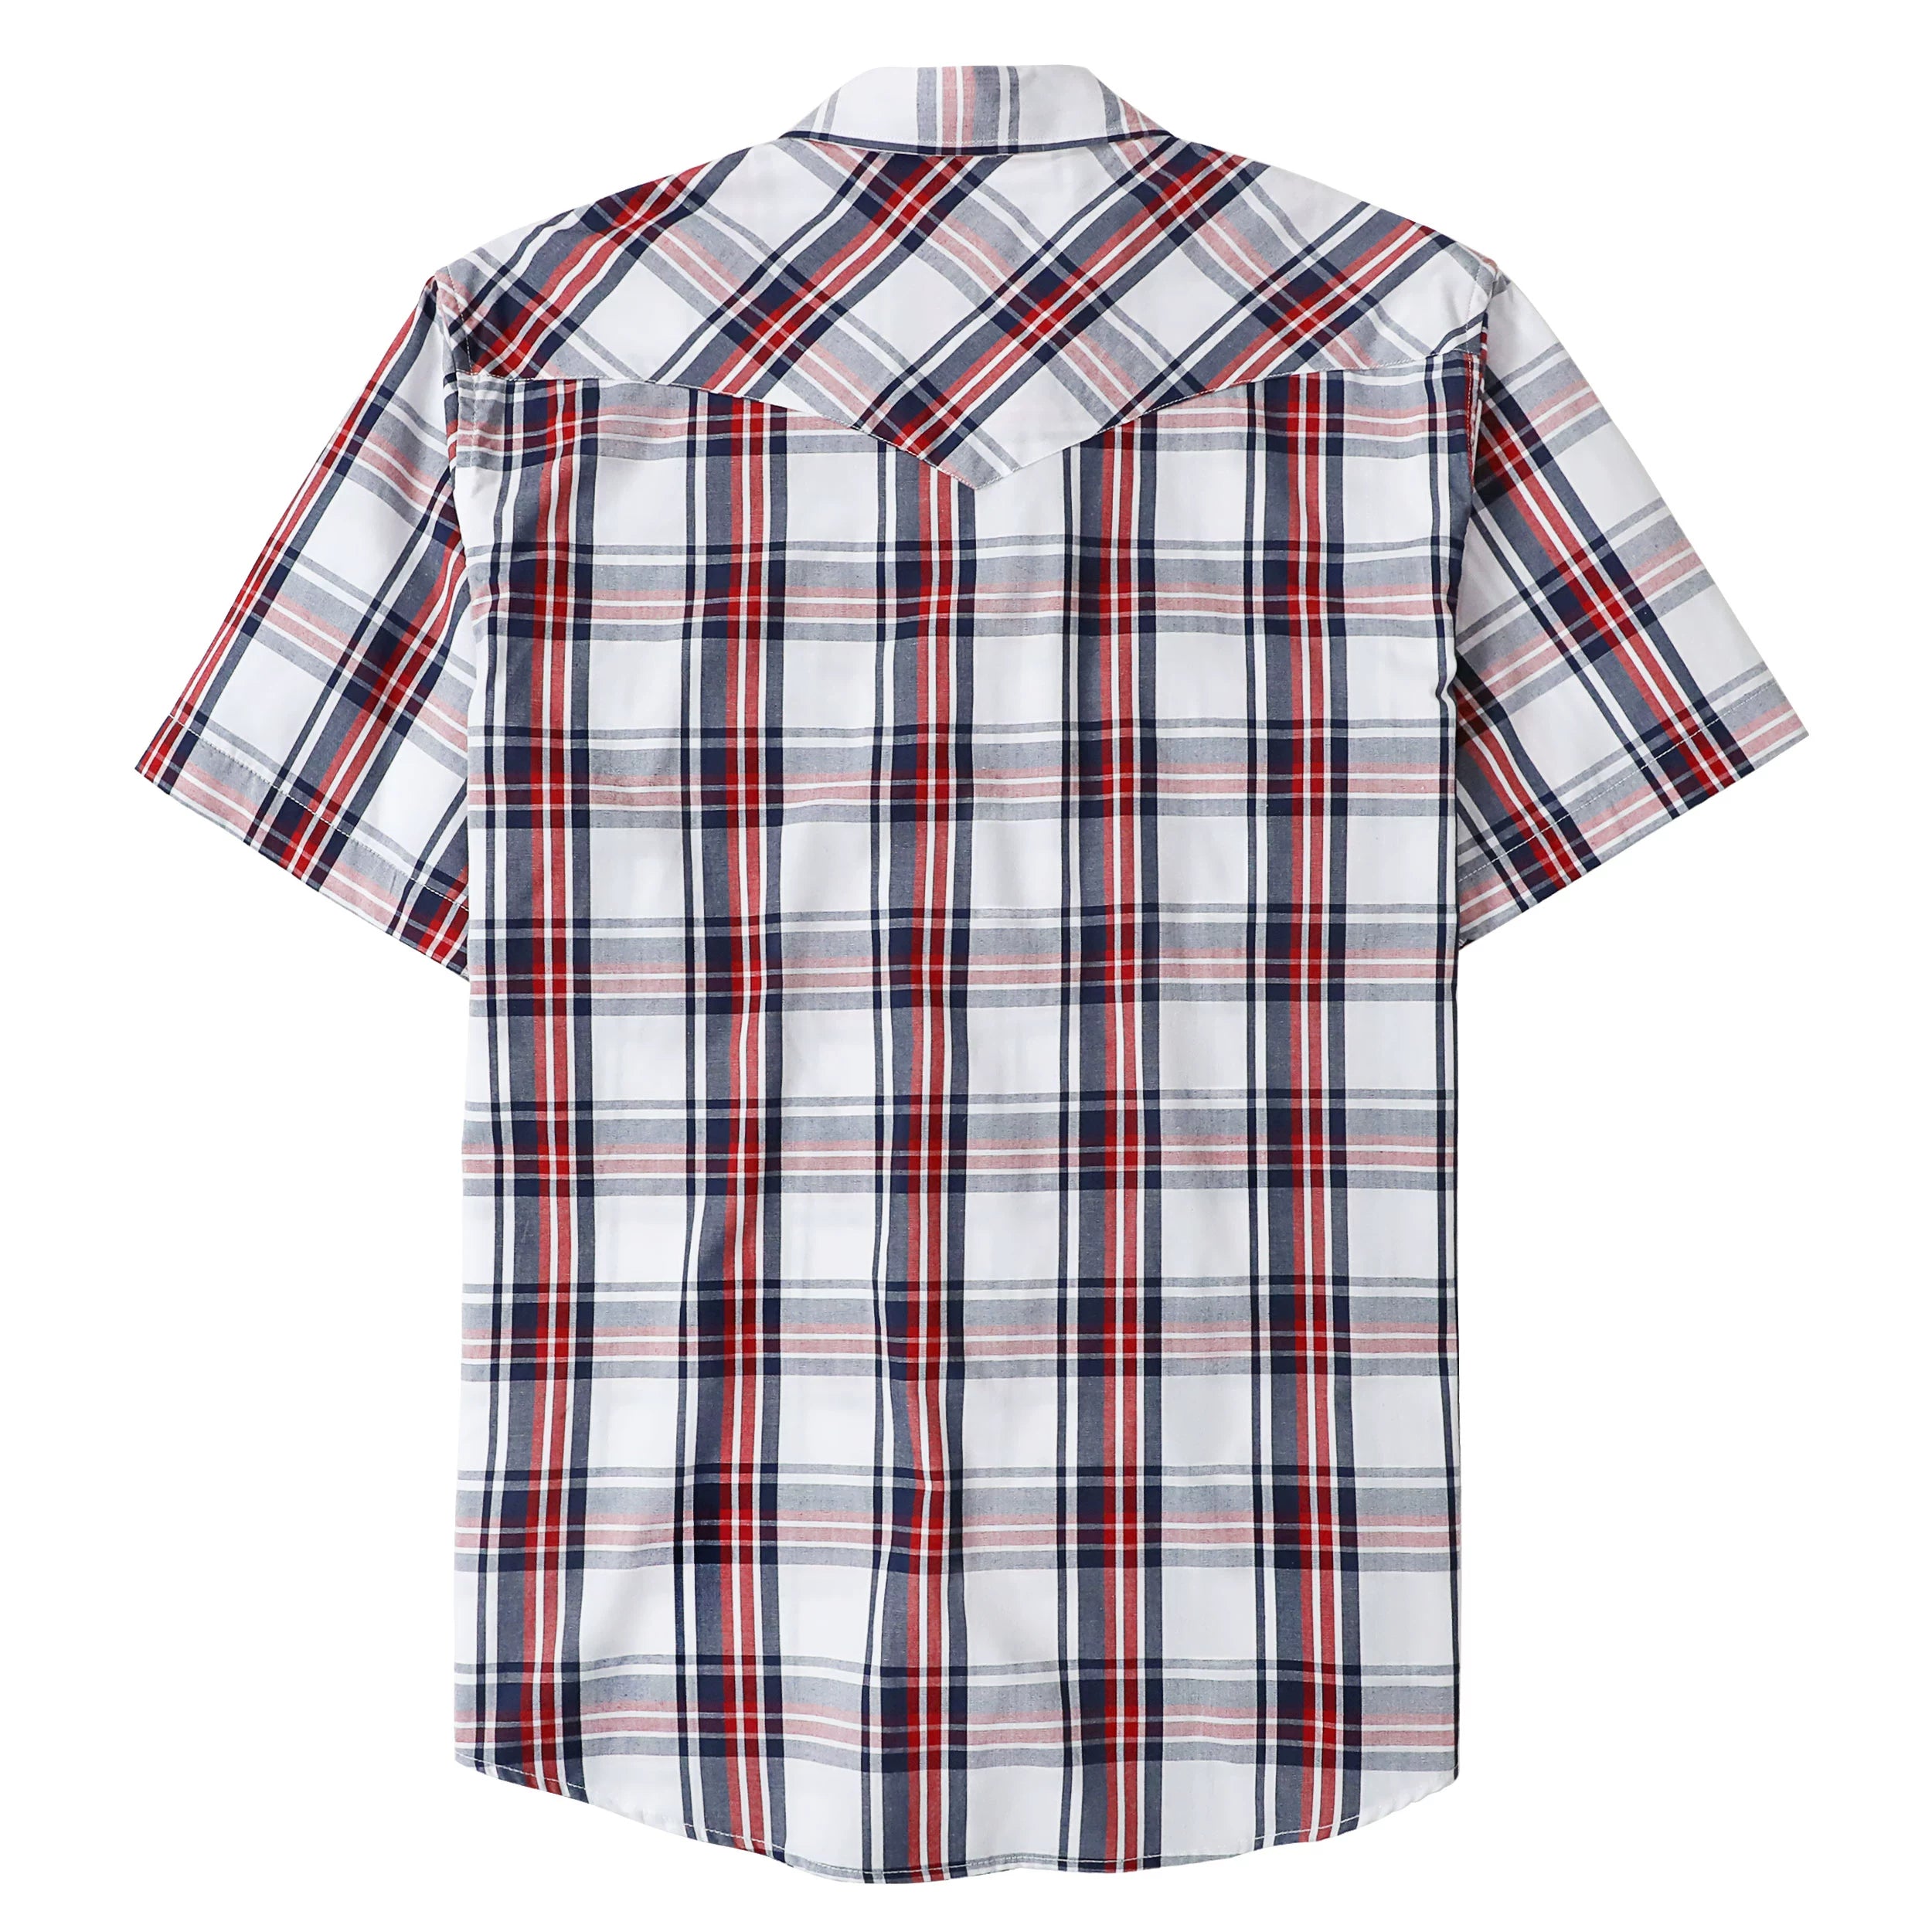 Dubinik® Western Shirts for Men Short Sleeve Plaid Pearl Snap Shirts for Men Button Up Shirt Cowboy Casual Work Shirt#41025